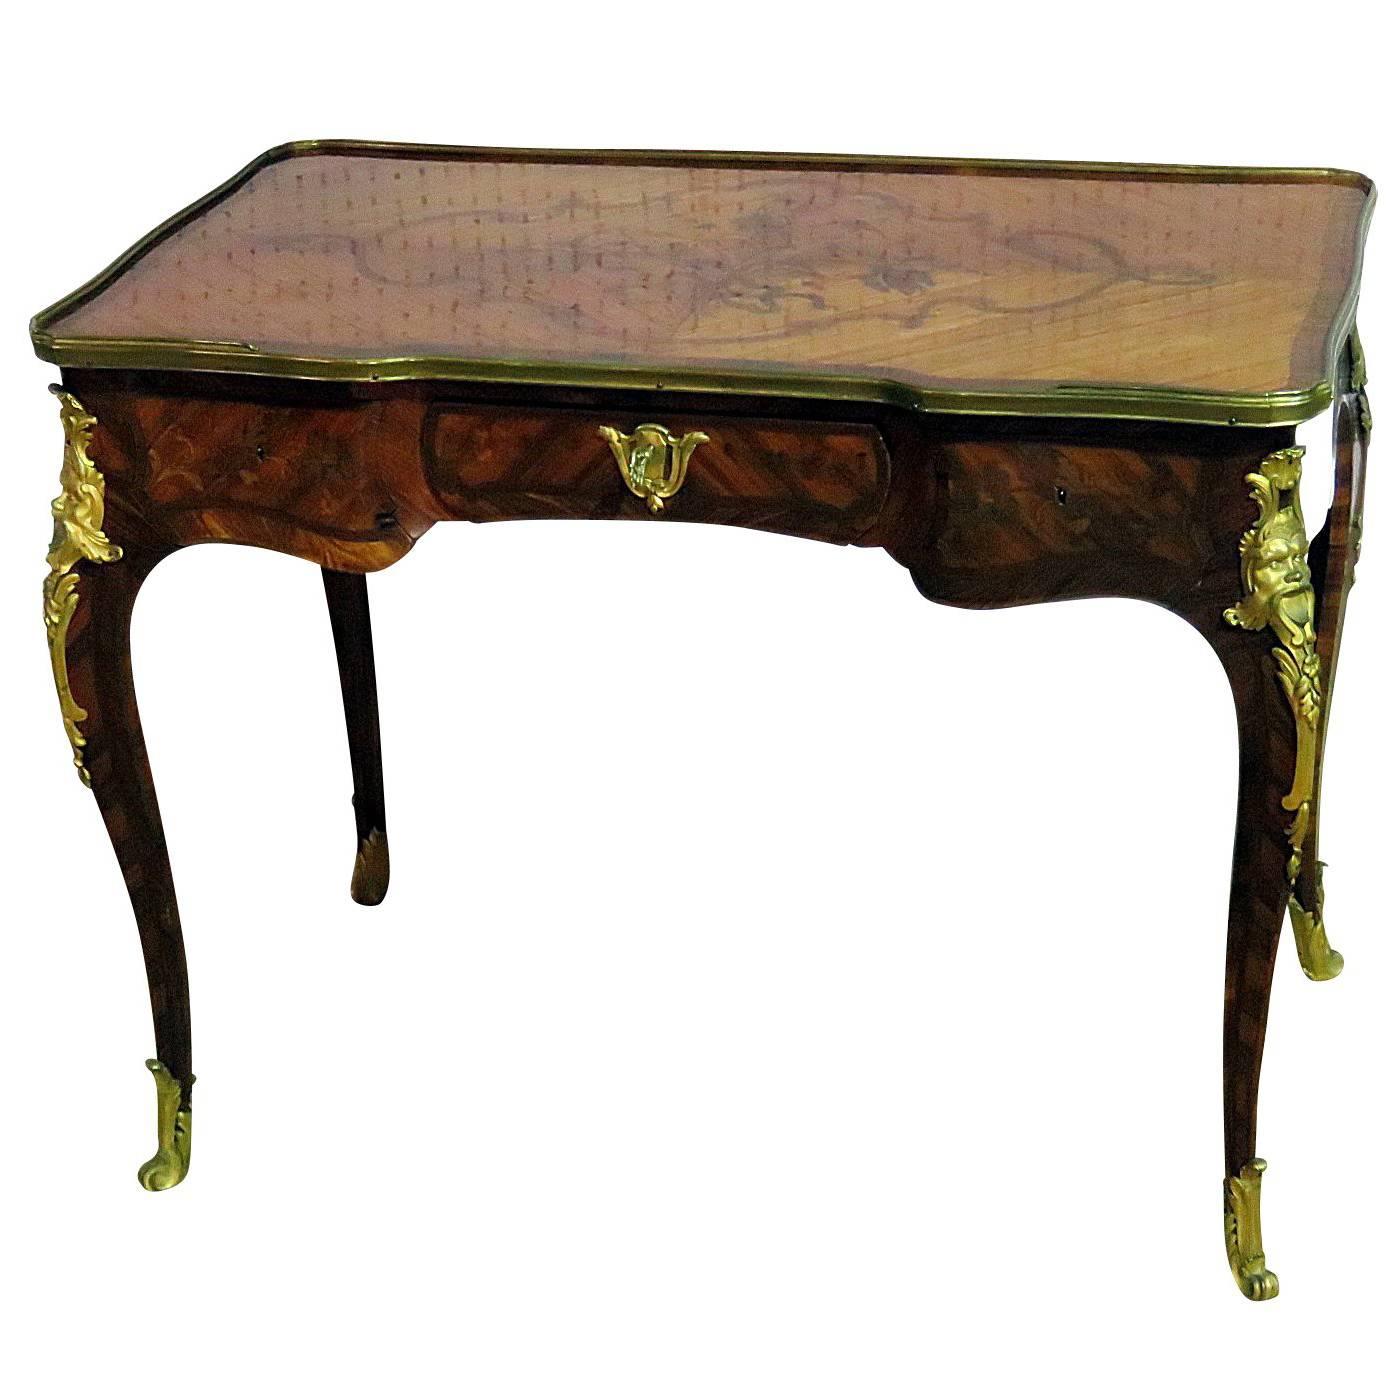 1870s Era French Inlaid Kingwood Louis XV Bureau Plat Writing Table Desk